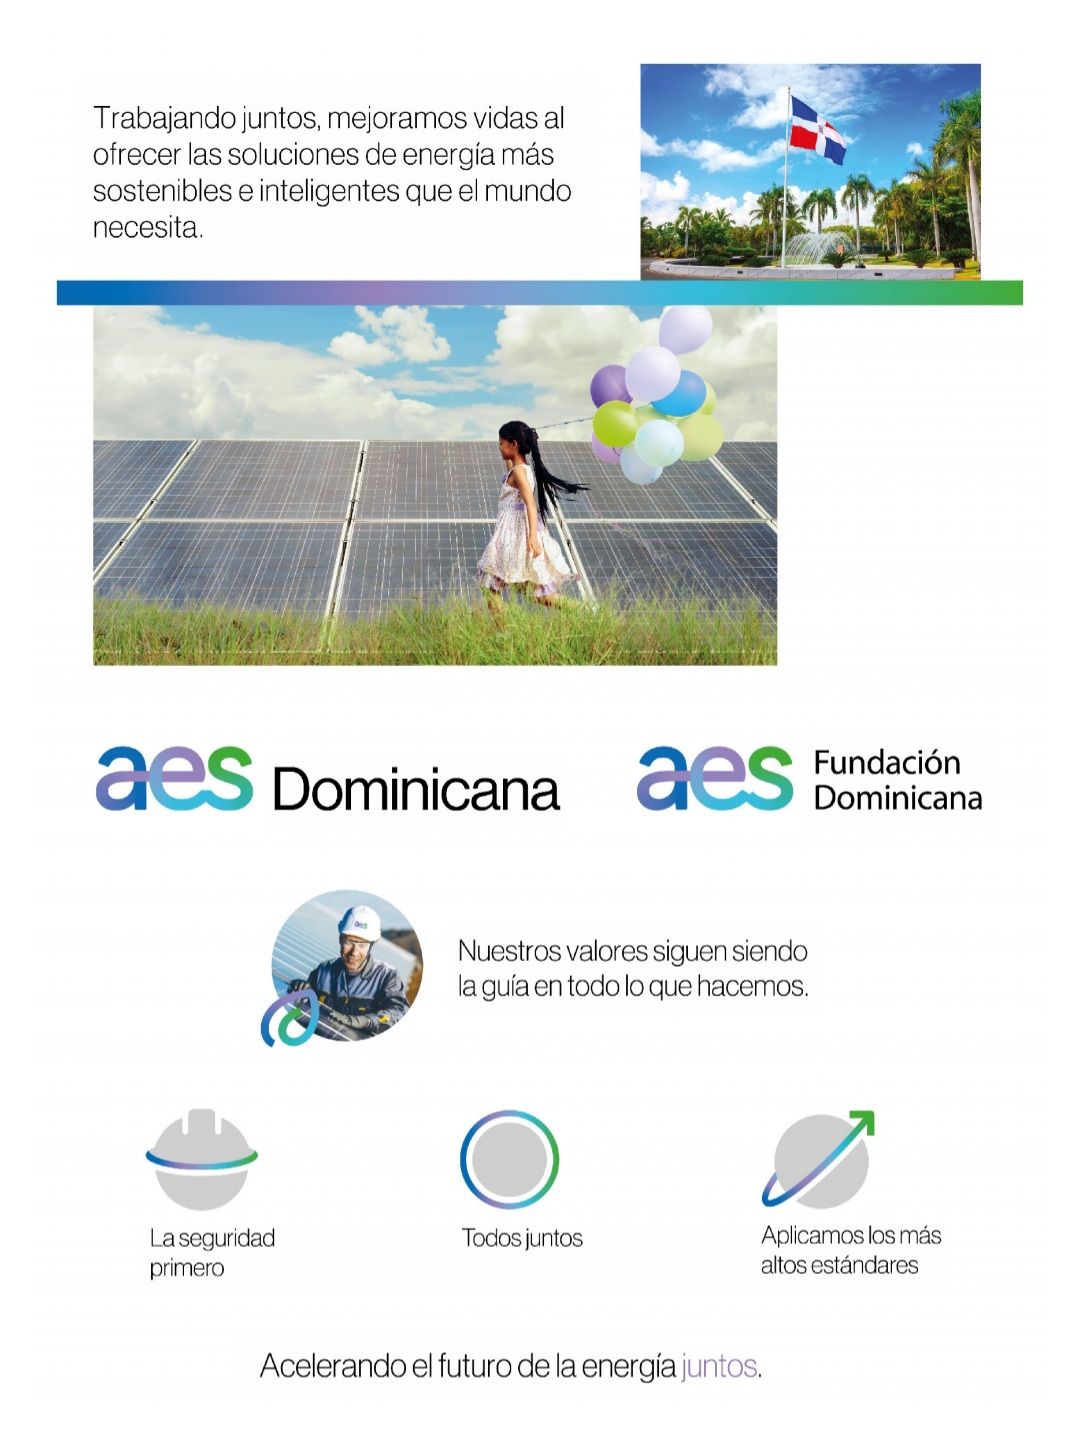 AES Dominicana